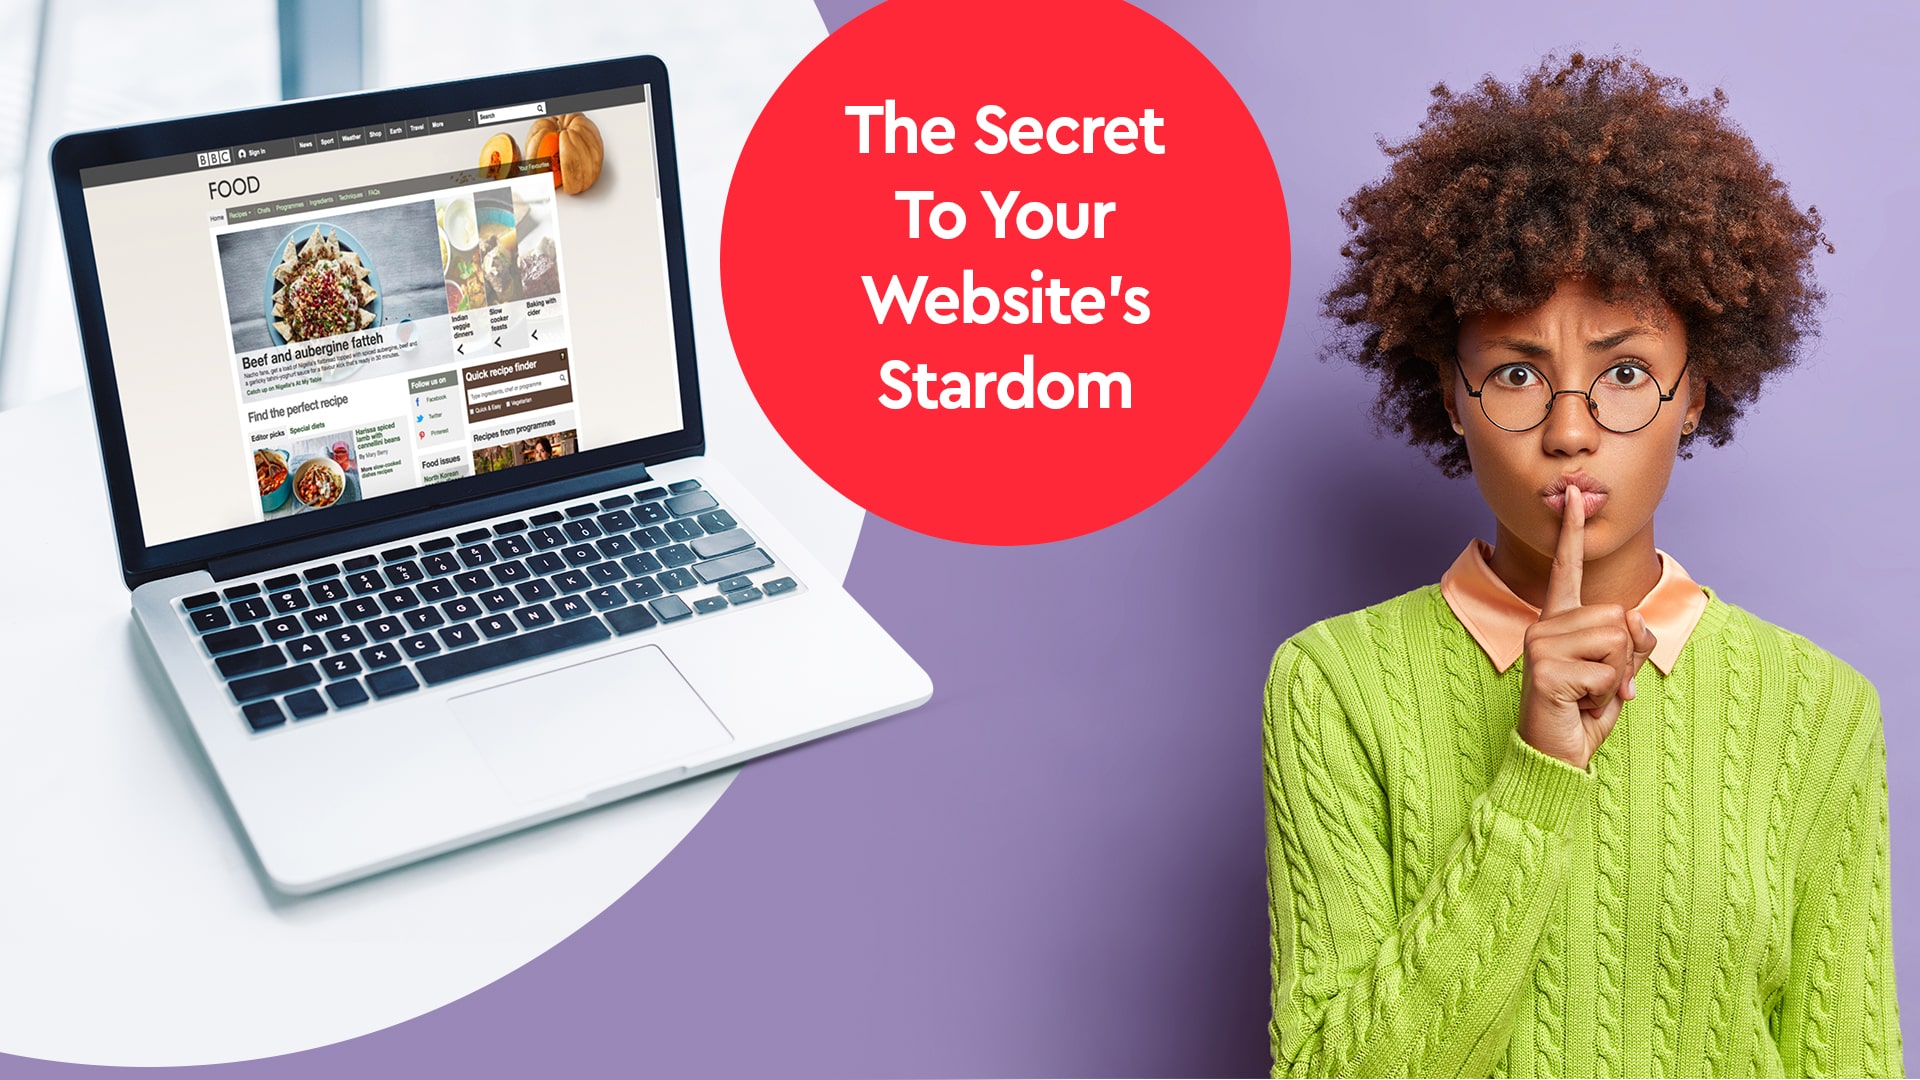 The Secret To Your Website’s Stardom